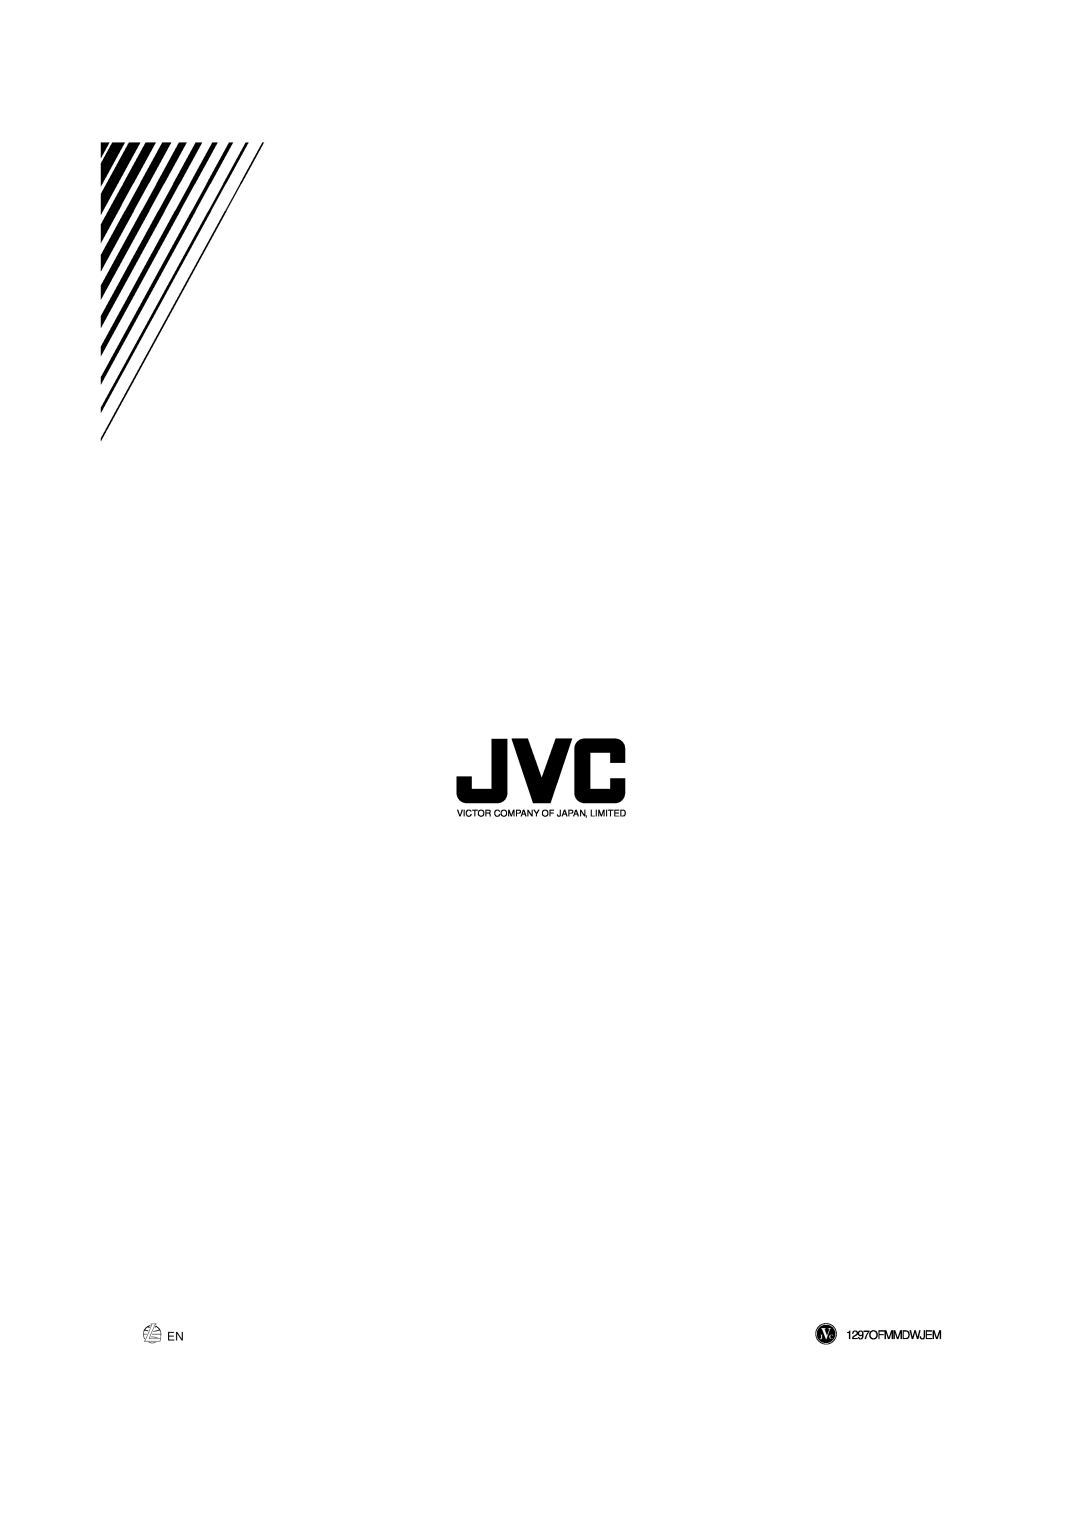 JVC RX-664VBK manual 1297OFMMDWJEM, Victor Company Of Japan, Limited 